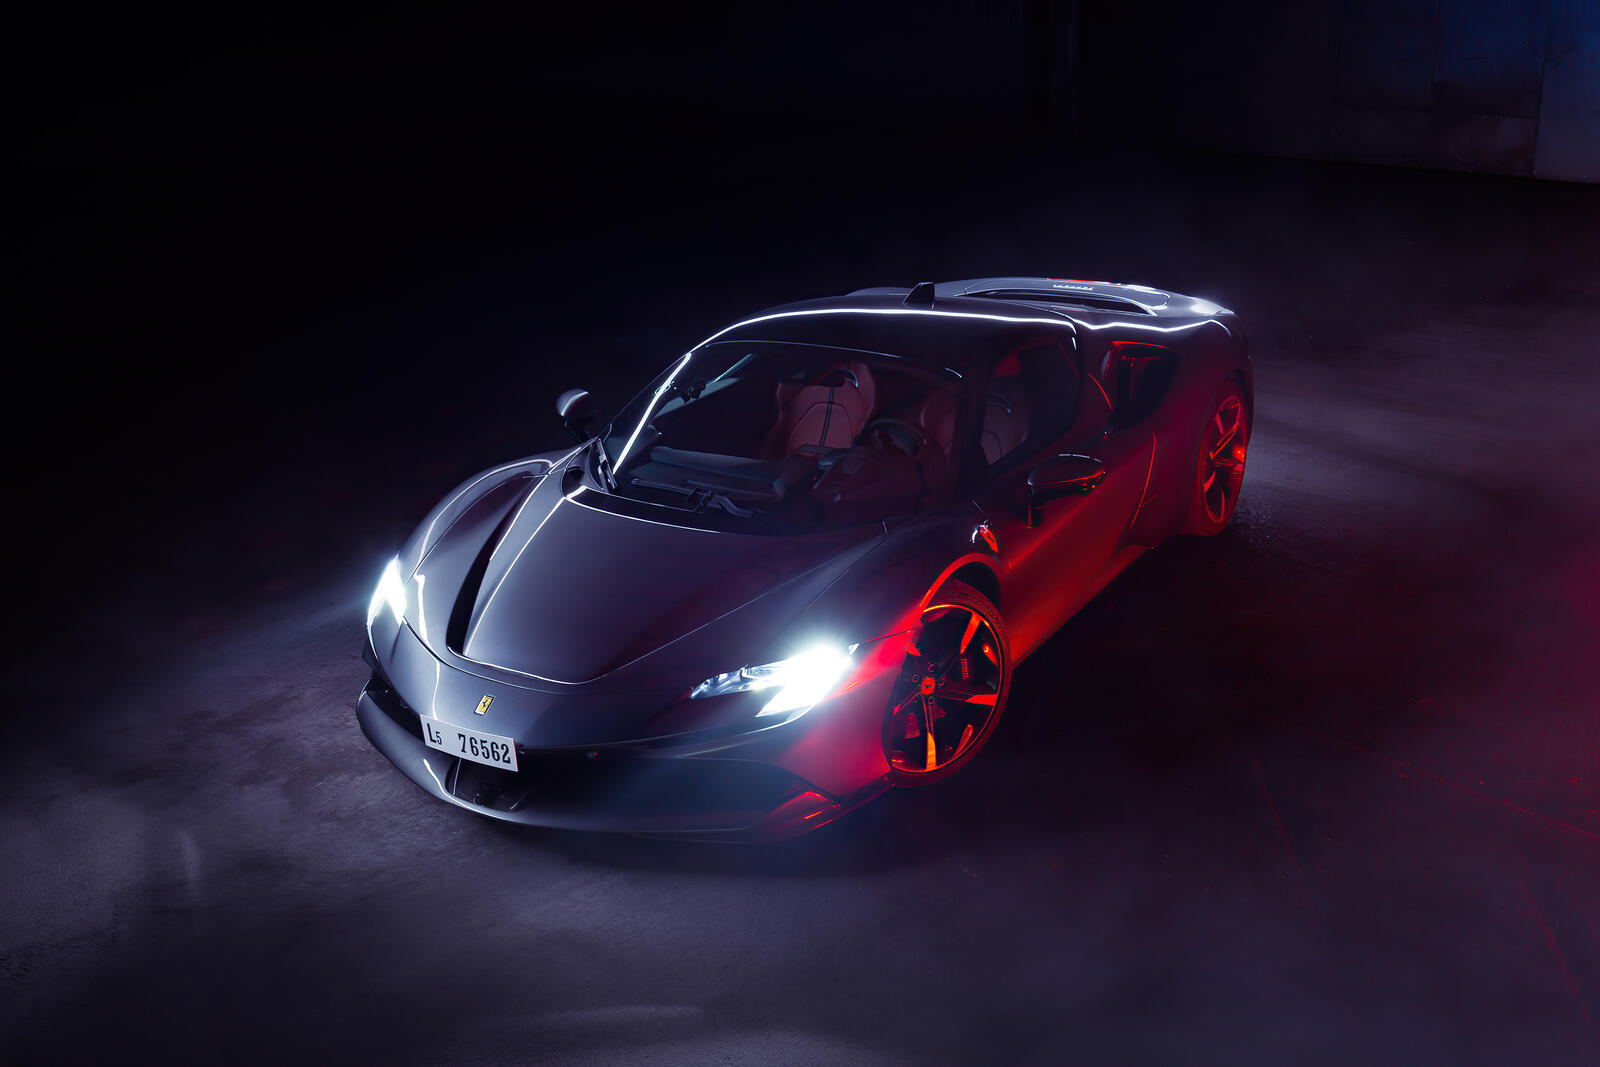 Free photo Ferrari sf90 stradale 2022 with headlights on in a dark room